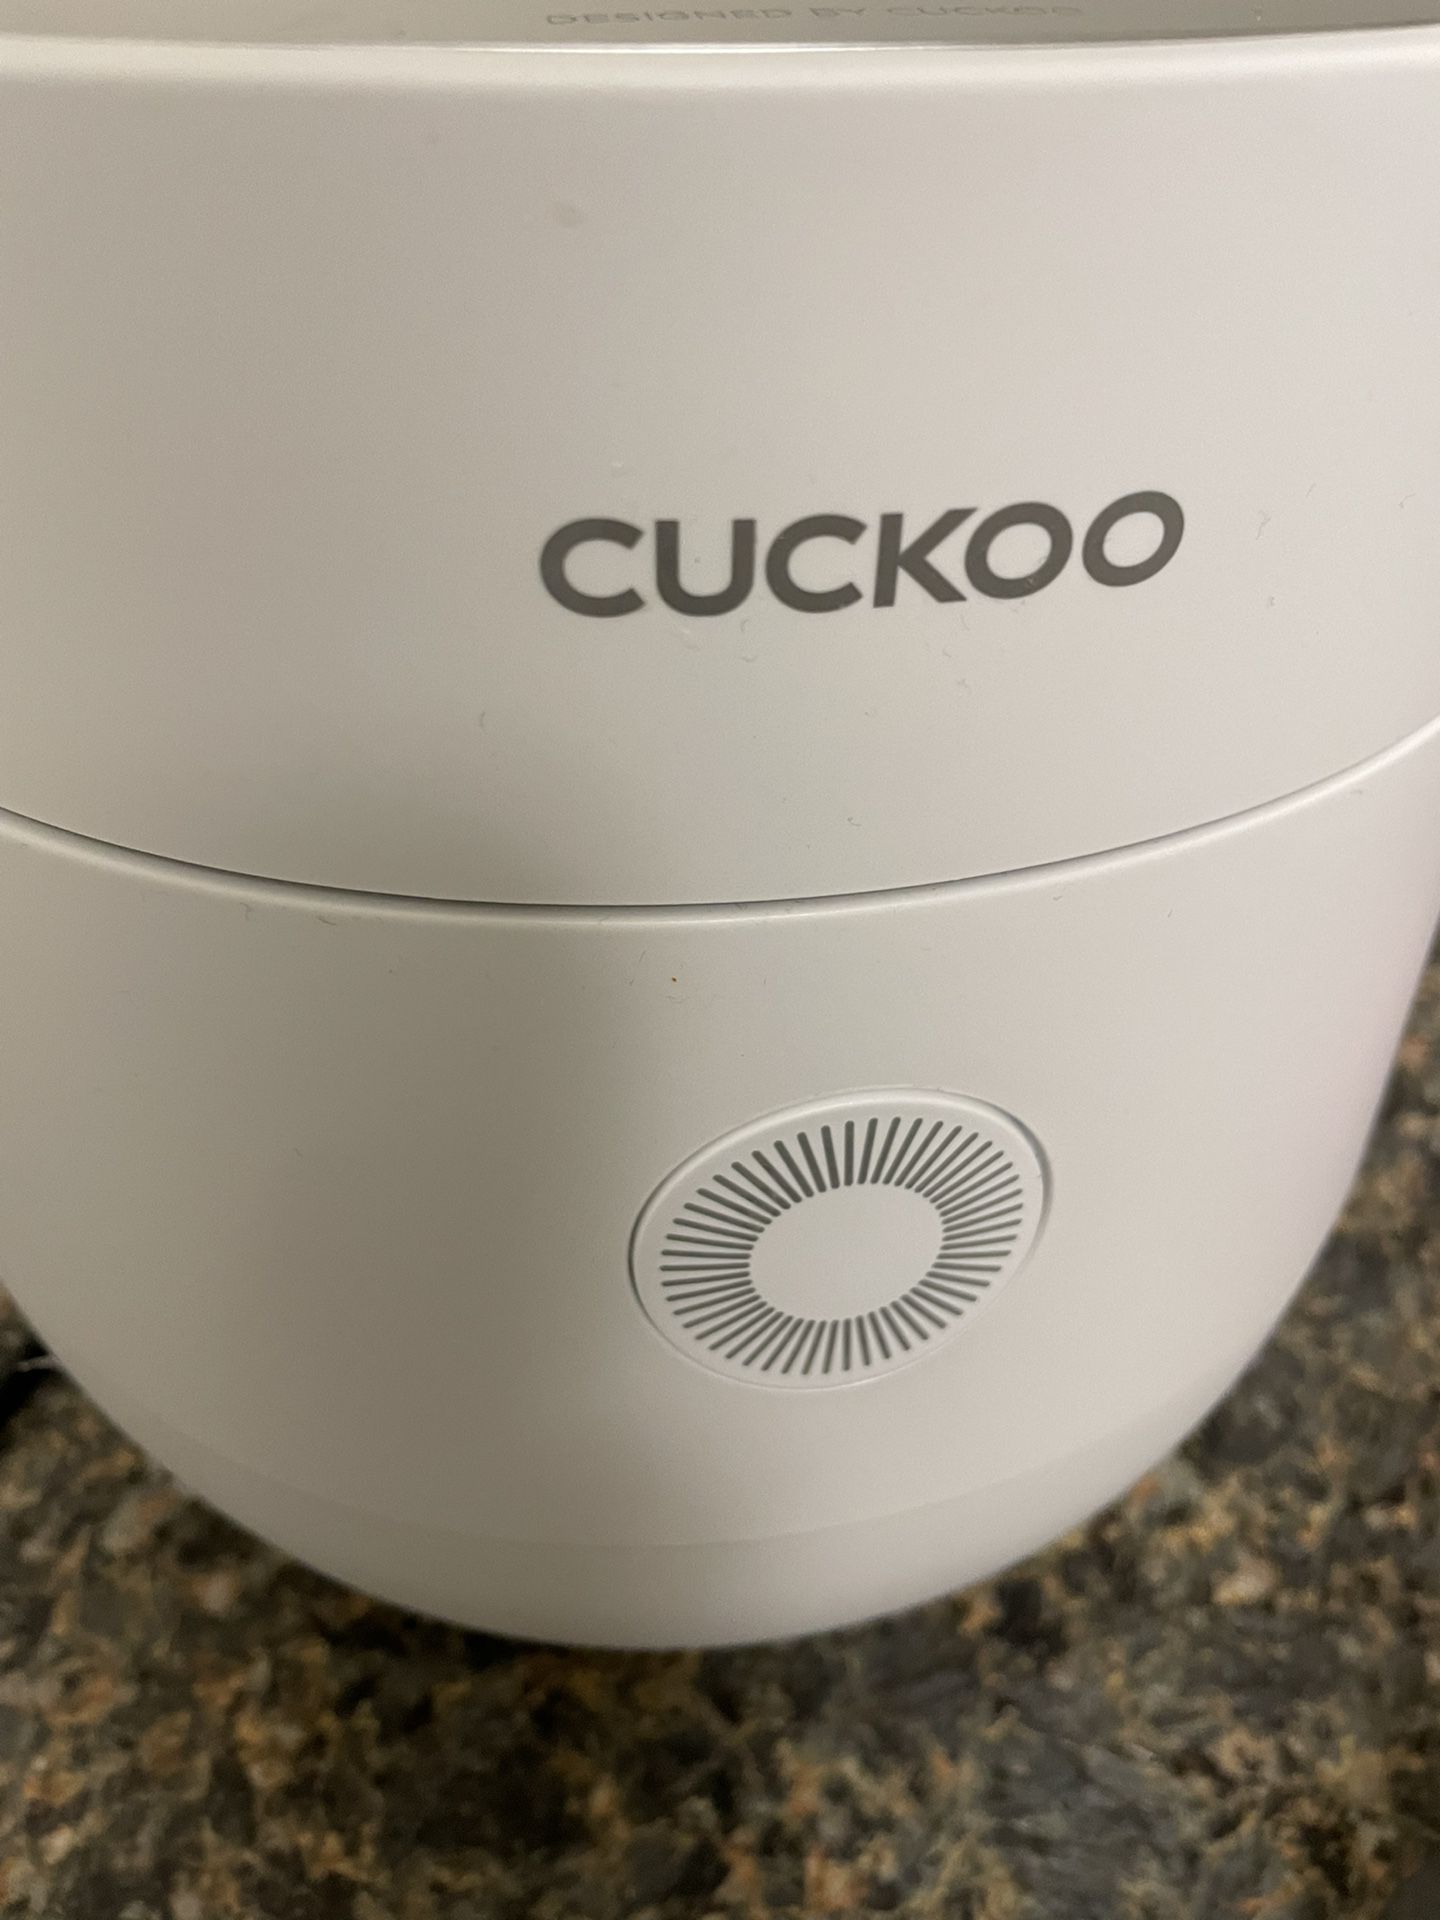 Cuckoo rice cooker (CR-0675F)